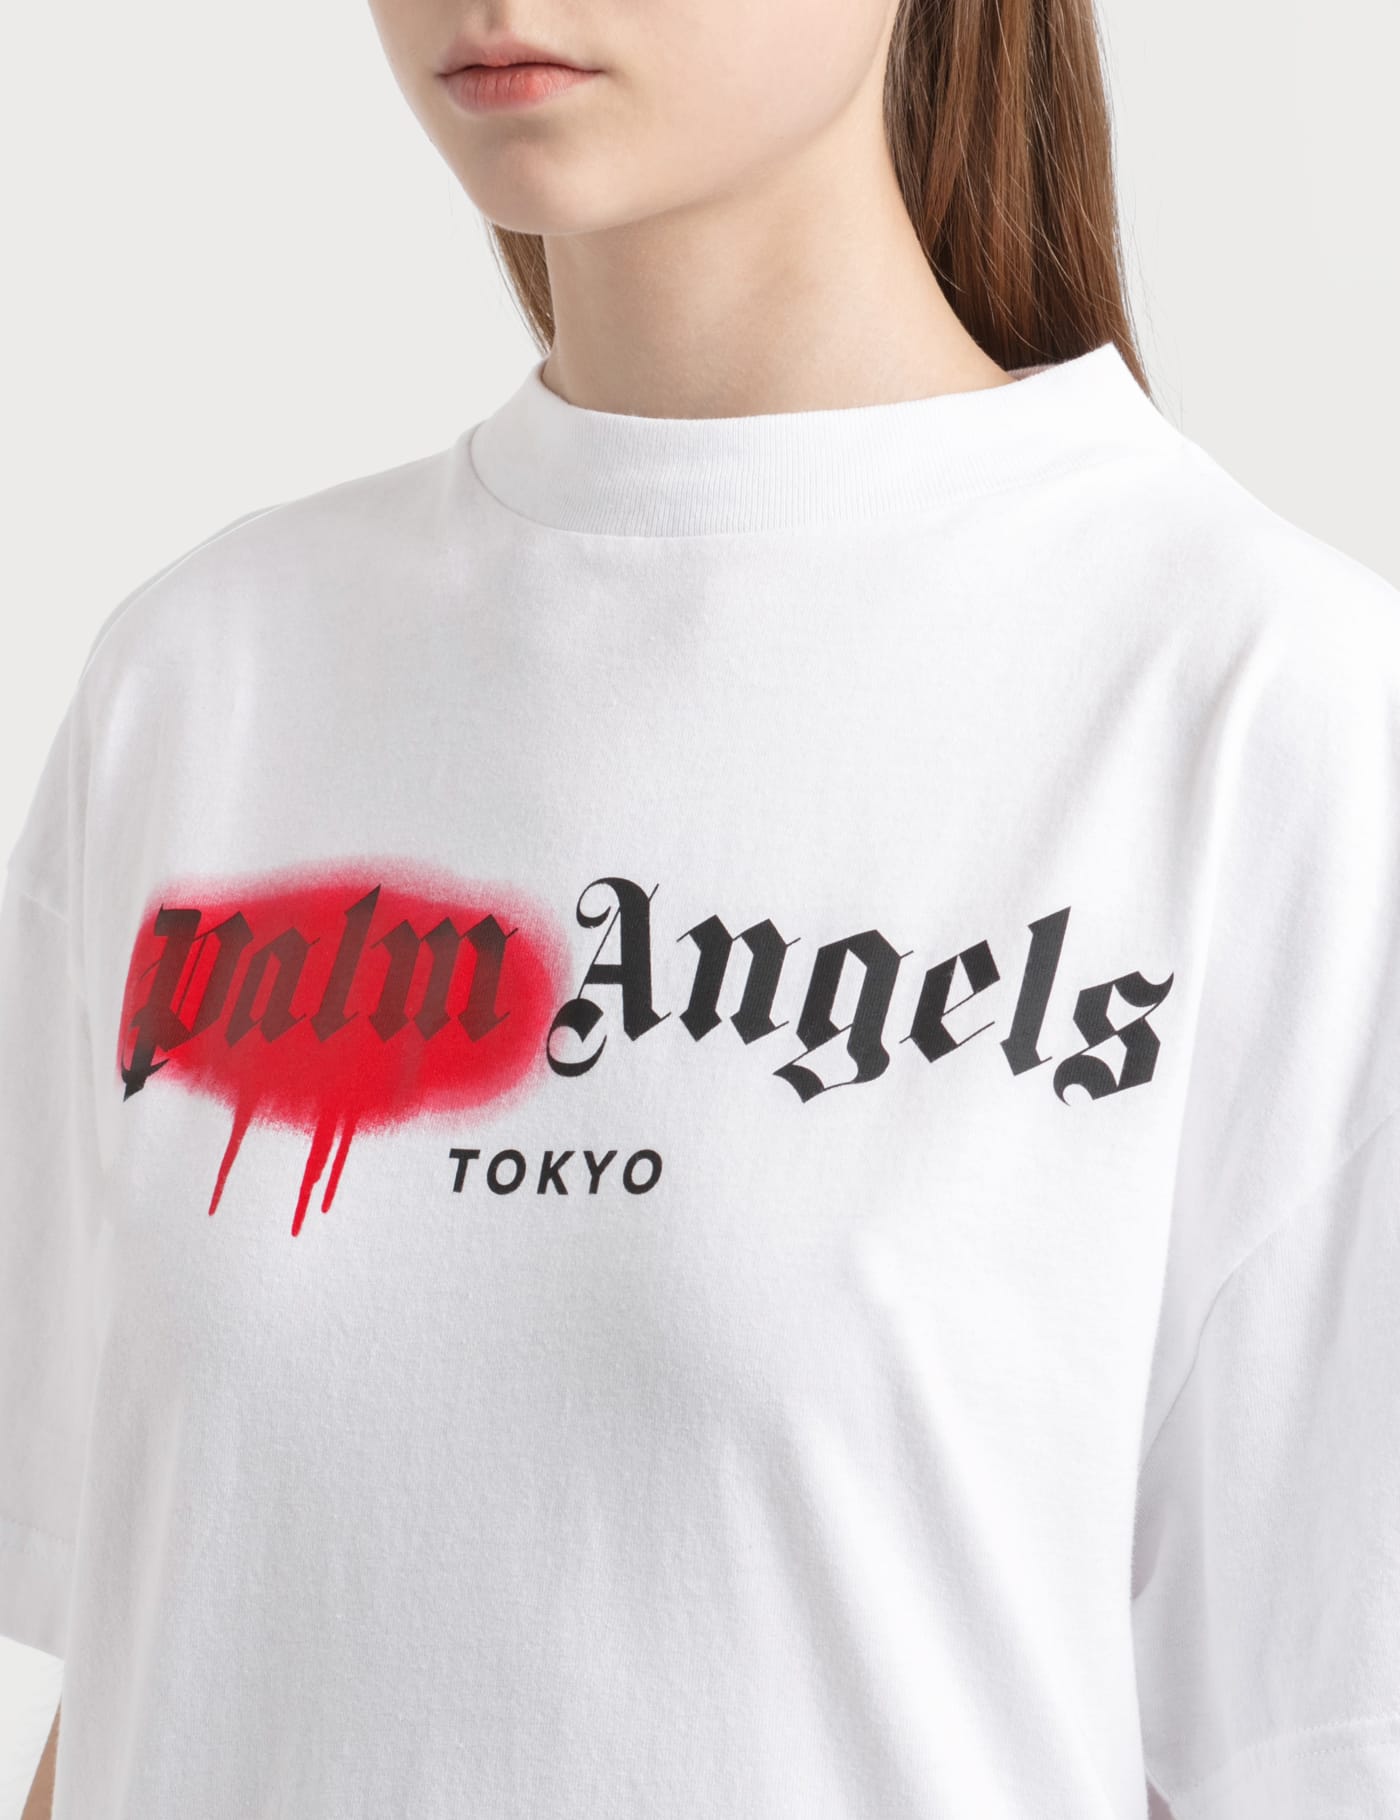 palm angels tokyo sprayed t shirt